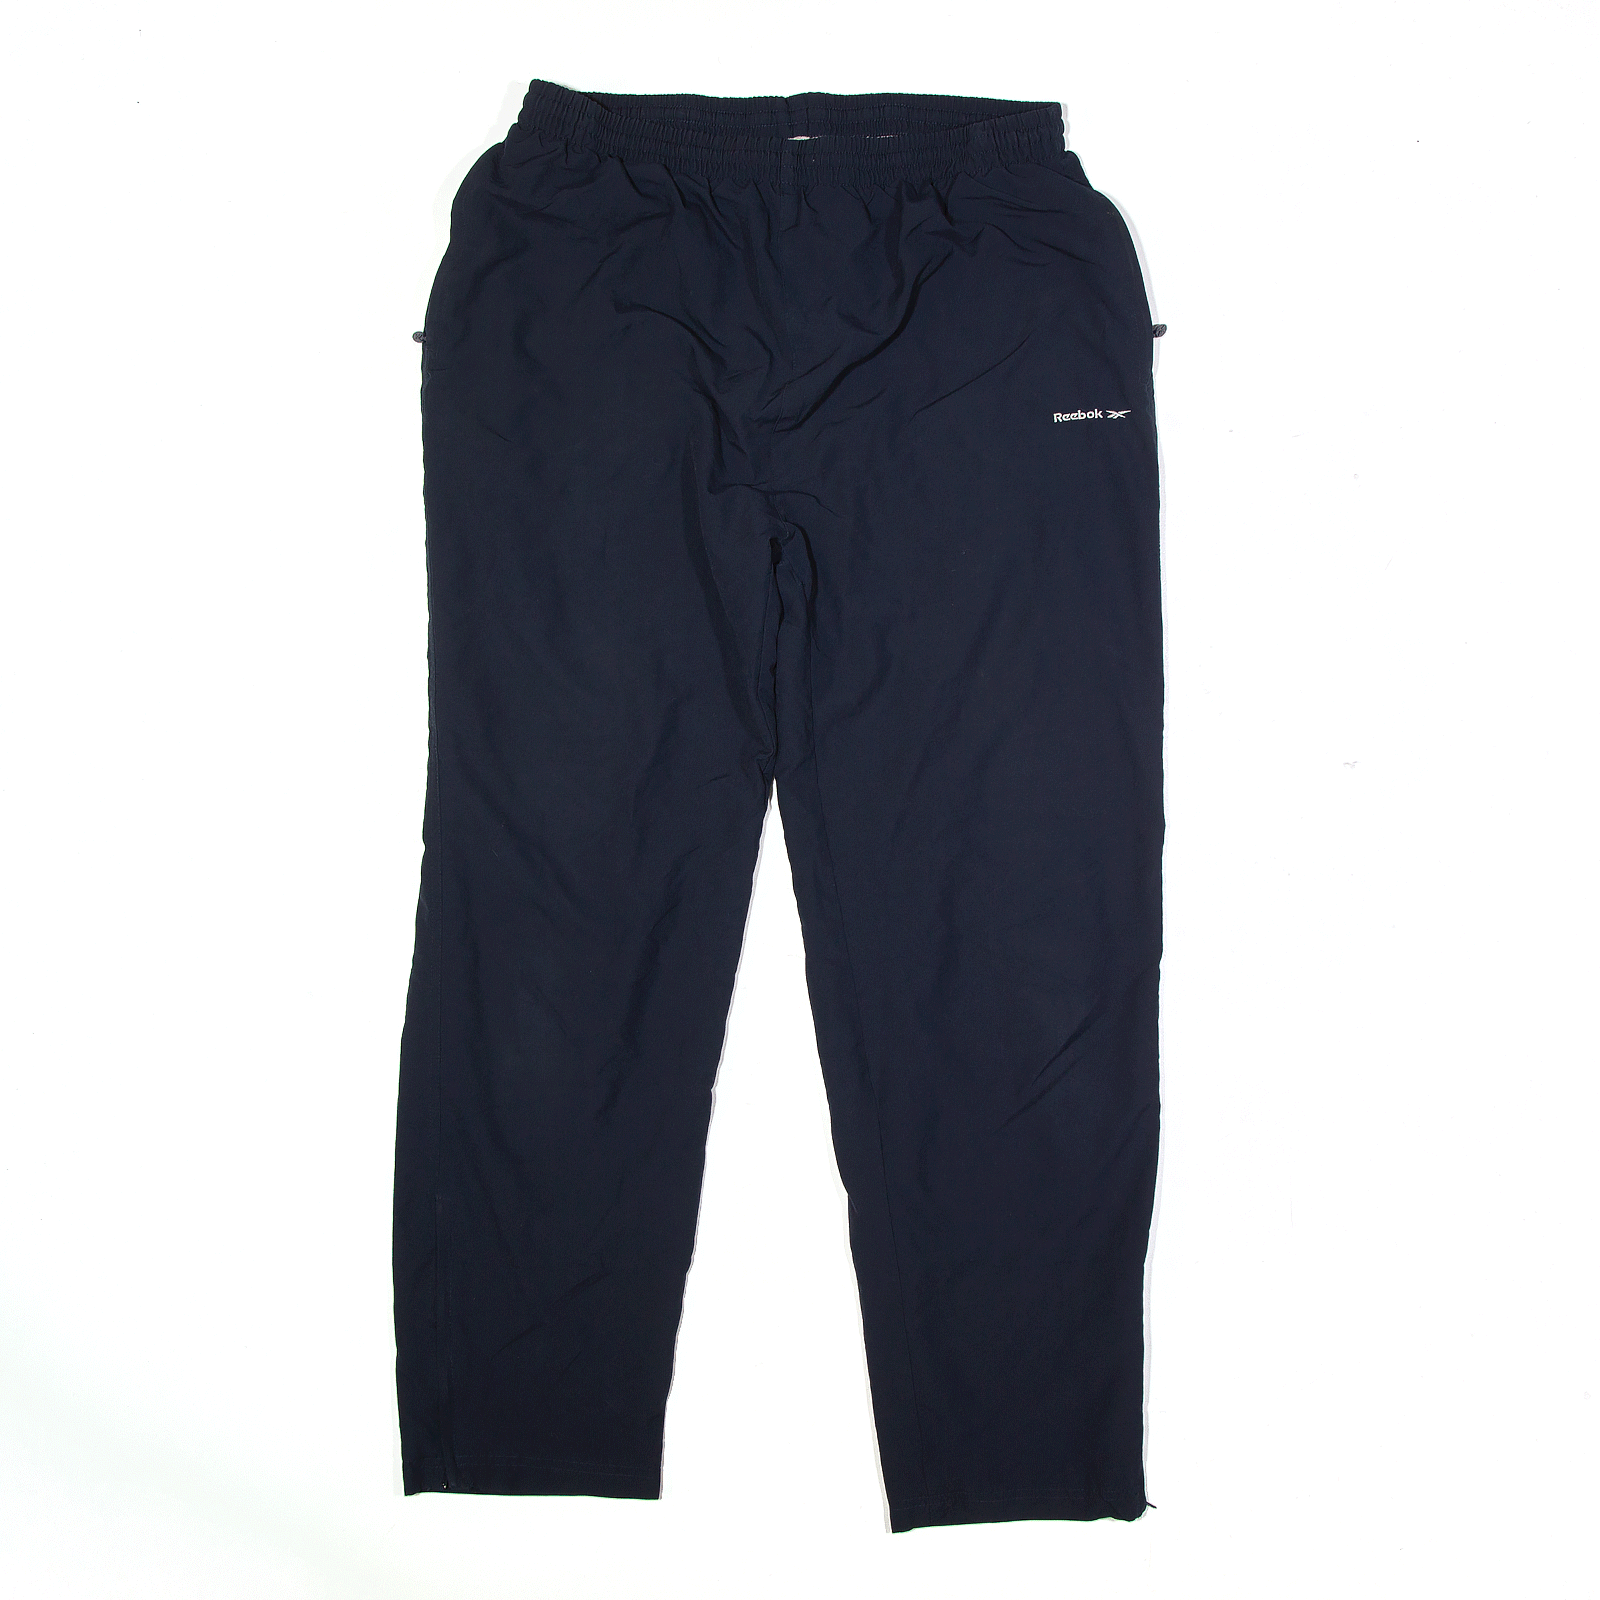 Reebok Men's Colorblocked Pants, up to Size 3XL - Walmart.com